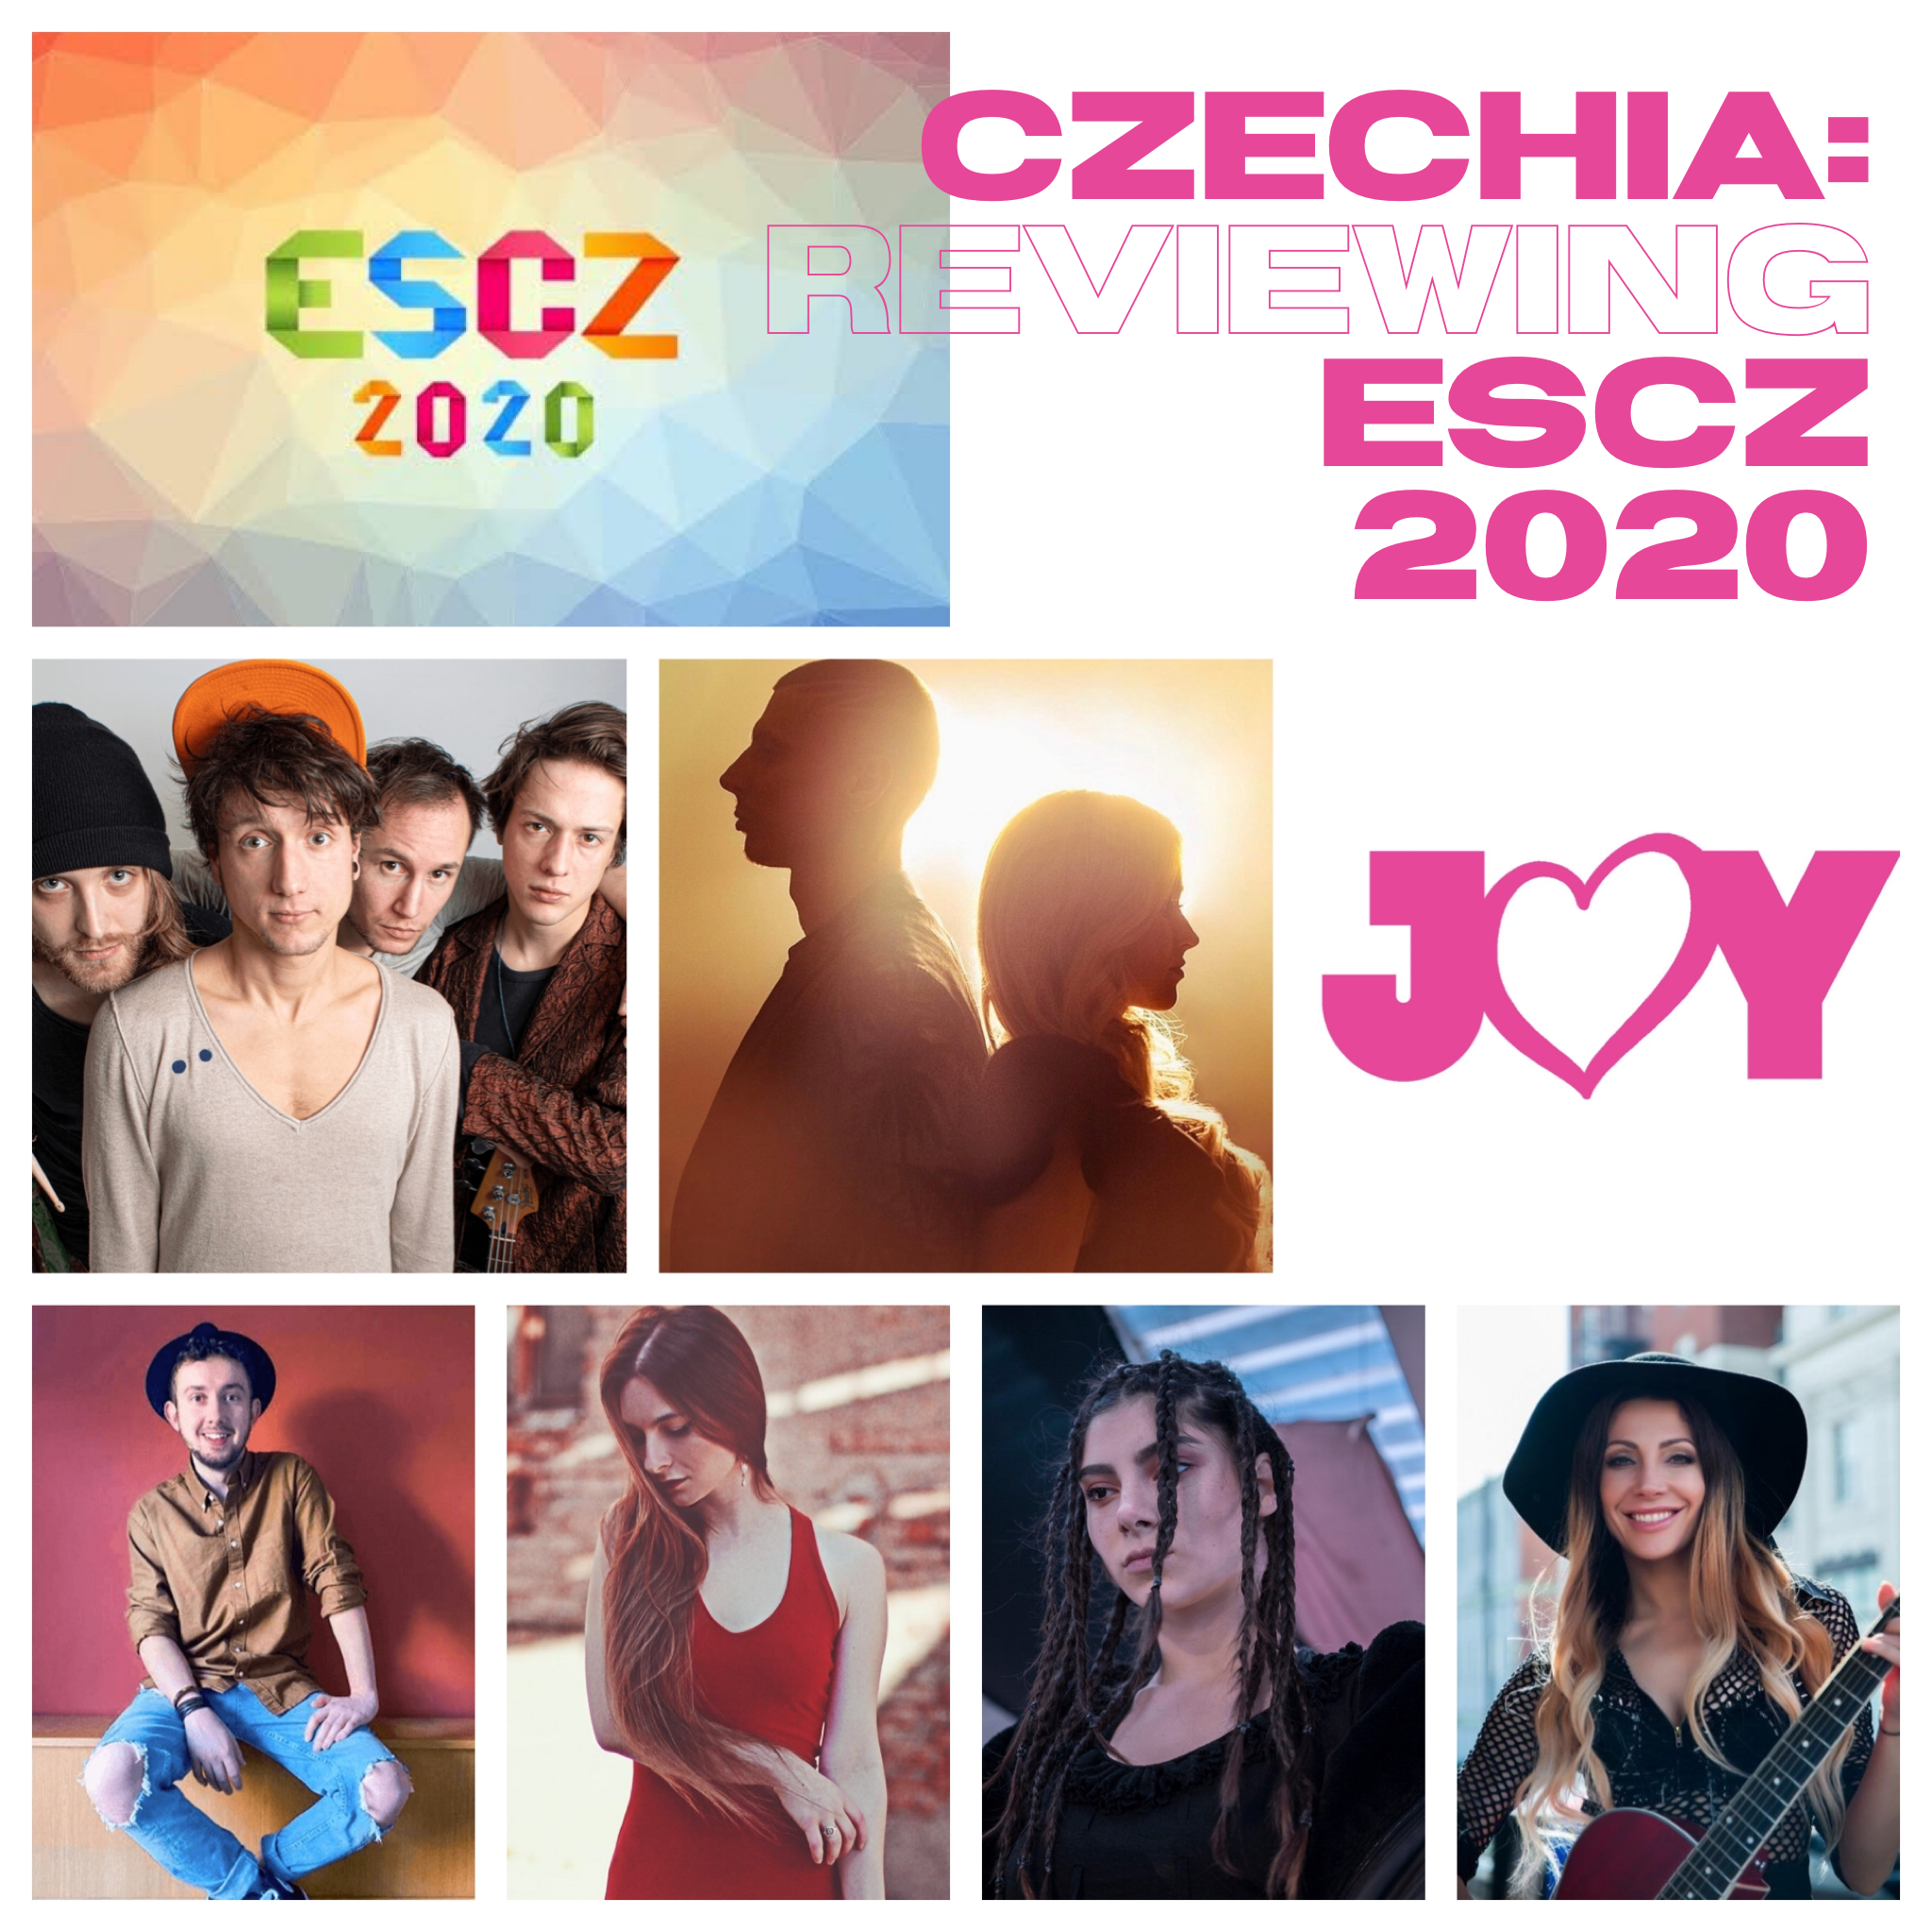 Czechia’s pub is open: Reviewing ESCZ 2020